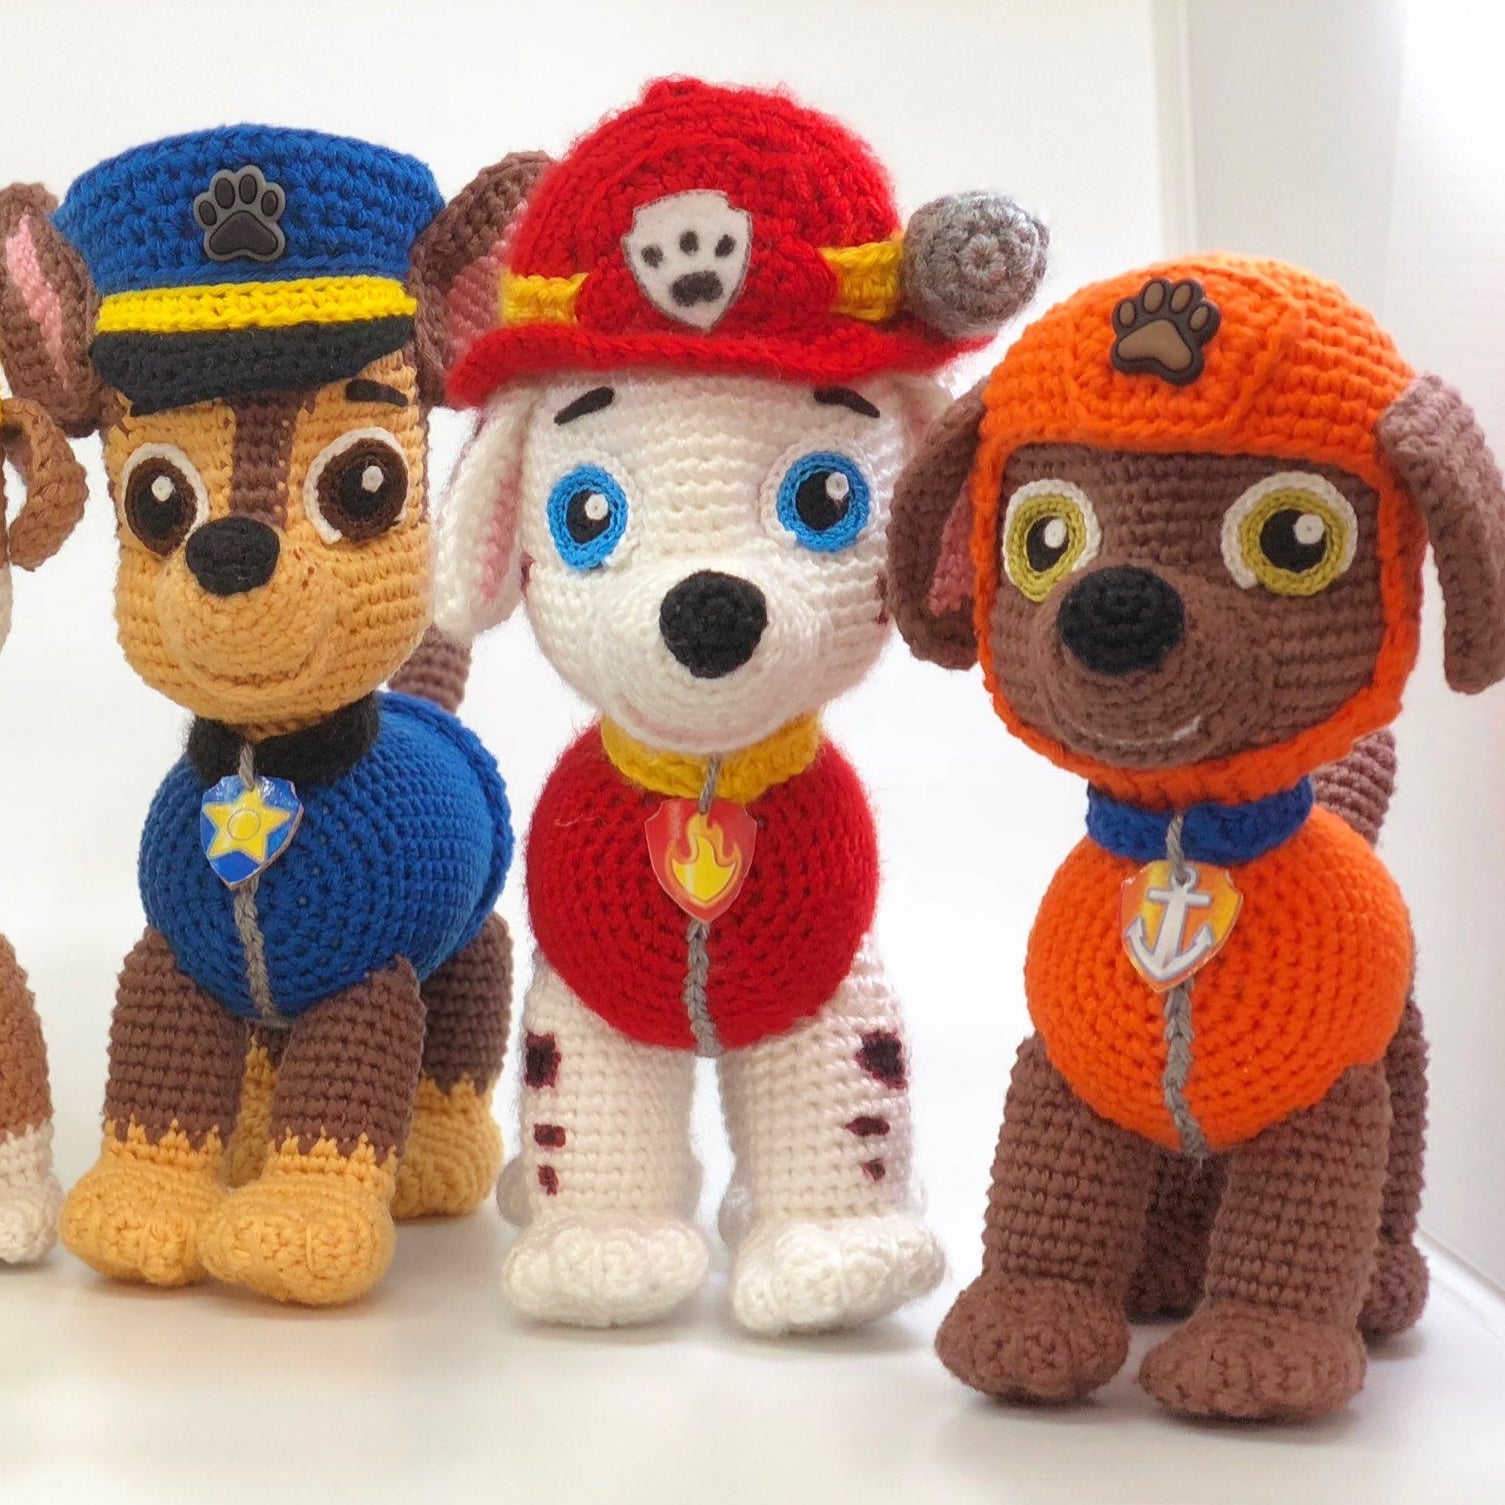 Most Adorable Dog Plush Crochet Patterns - Derpy